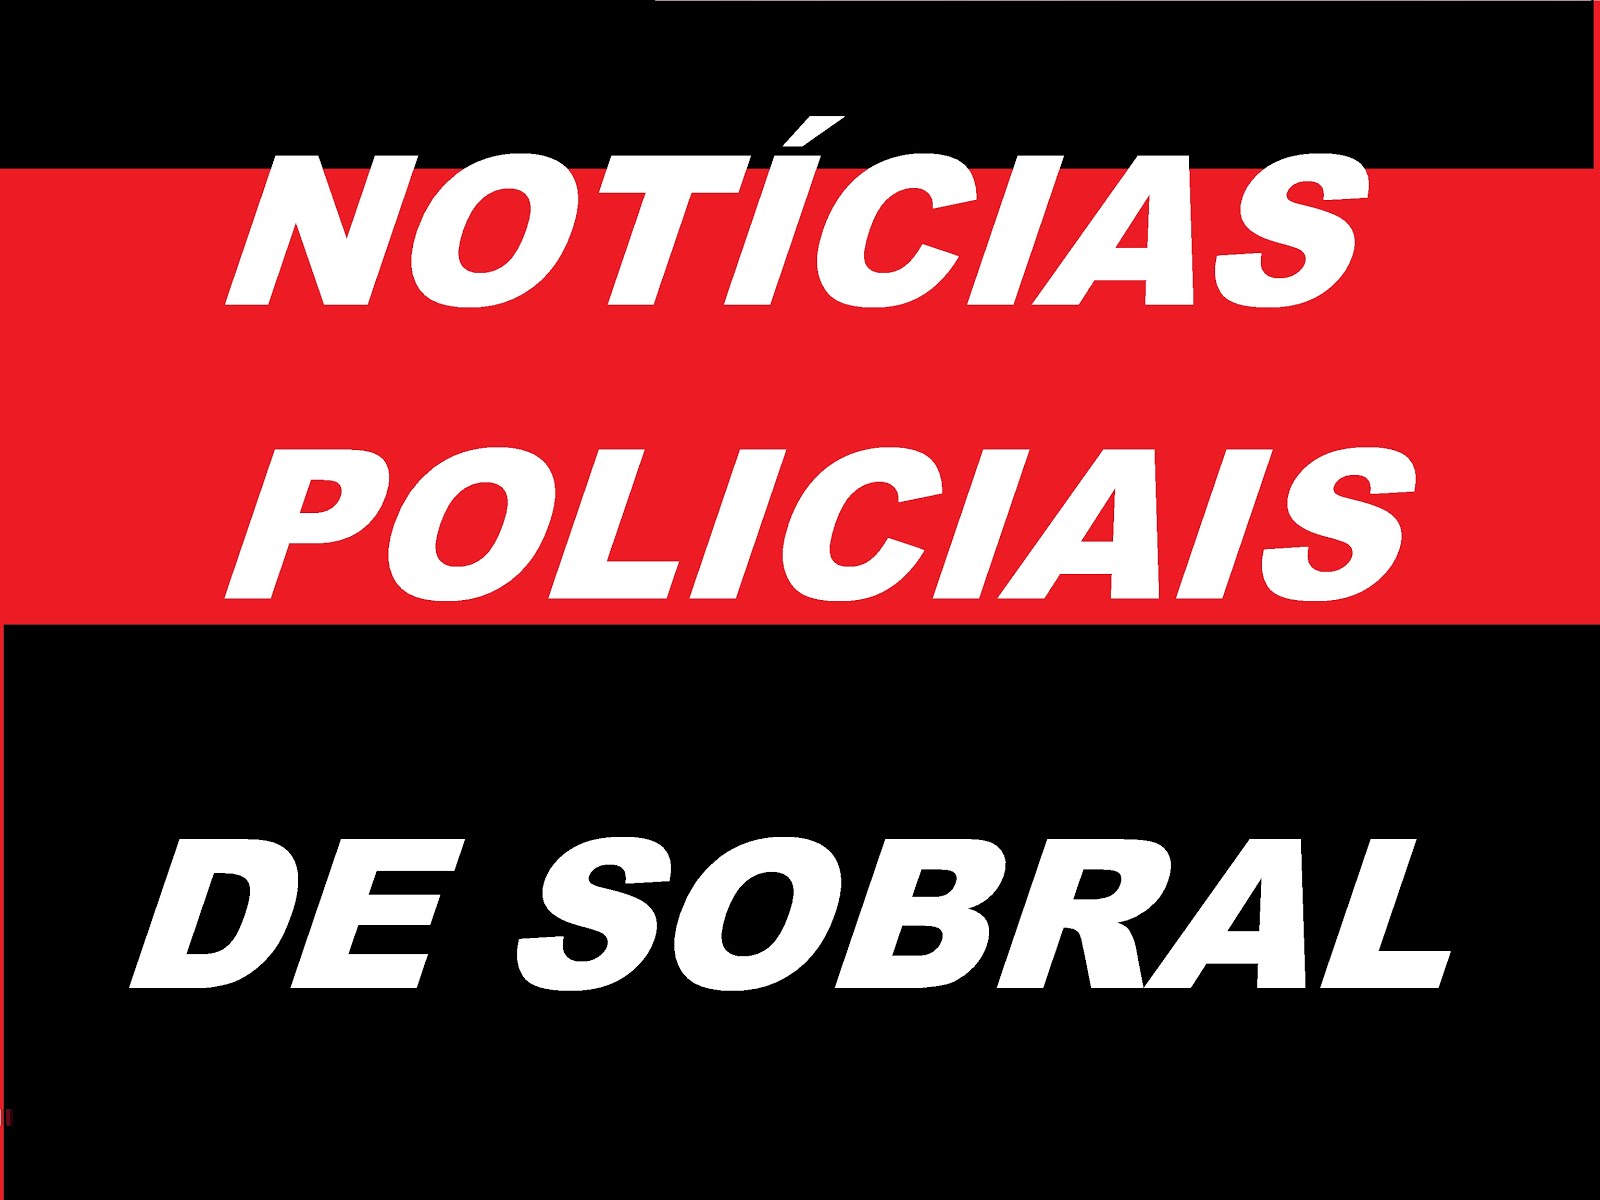 AS ULTIMAS NOTICIAS POLICIAIS DE SOBRAL